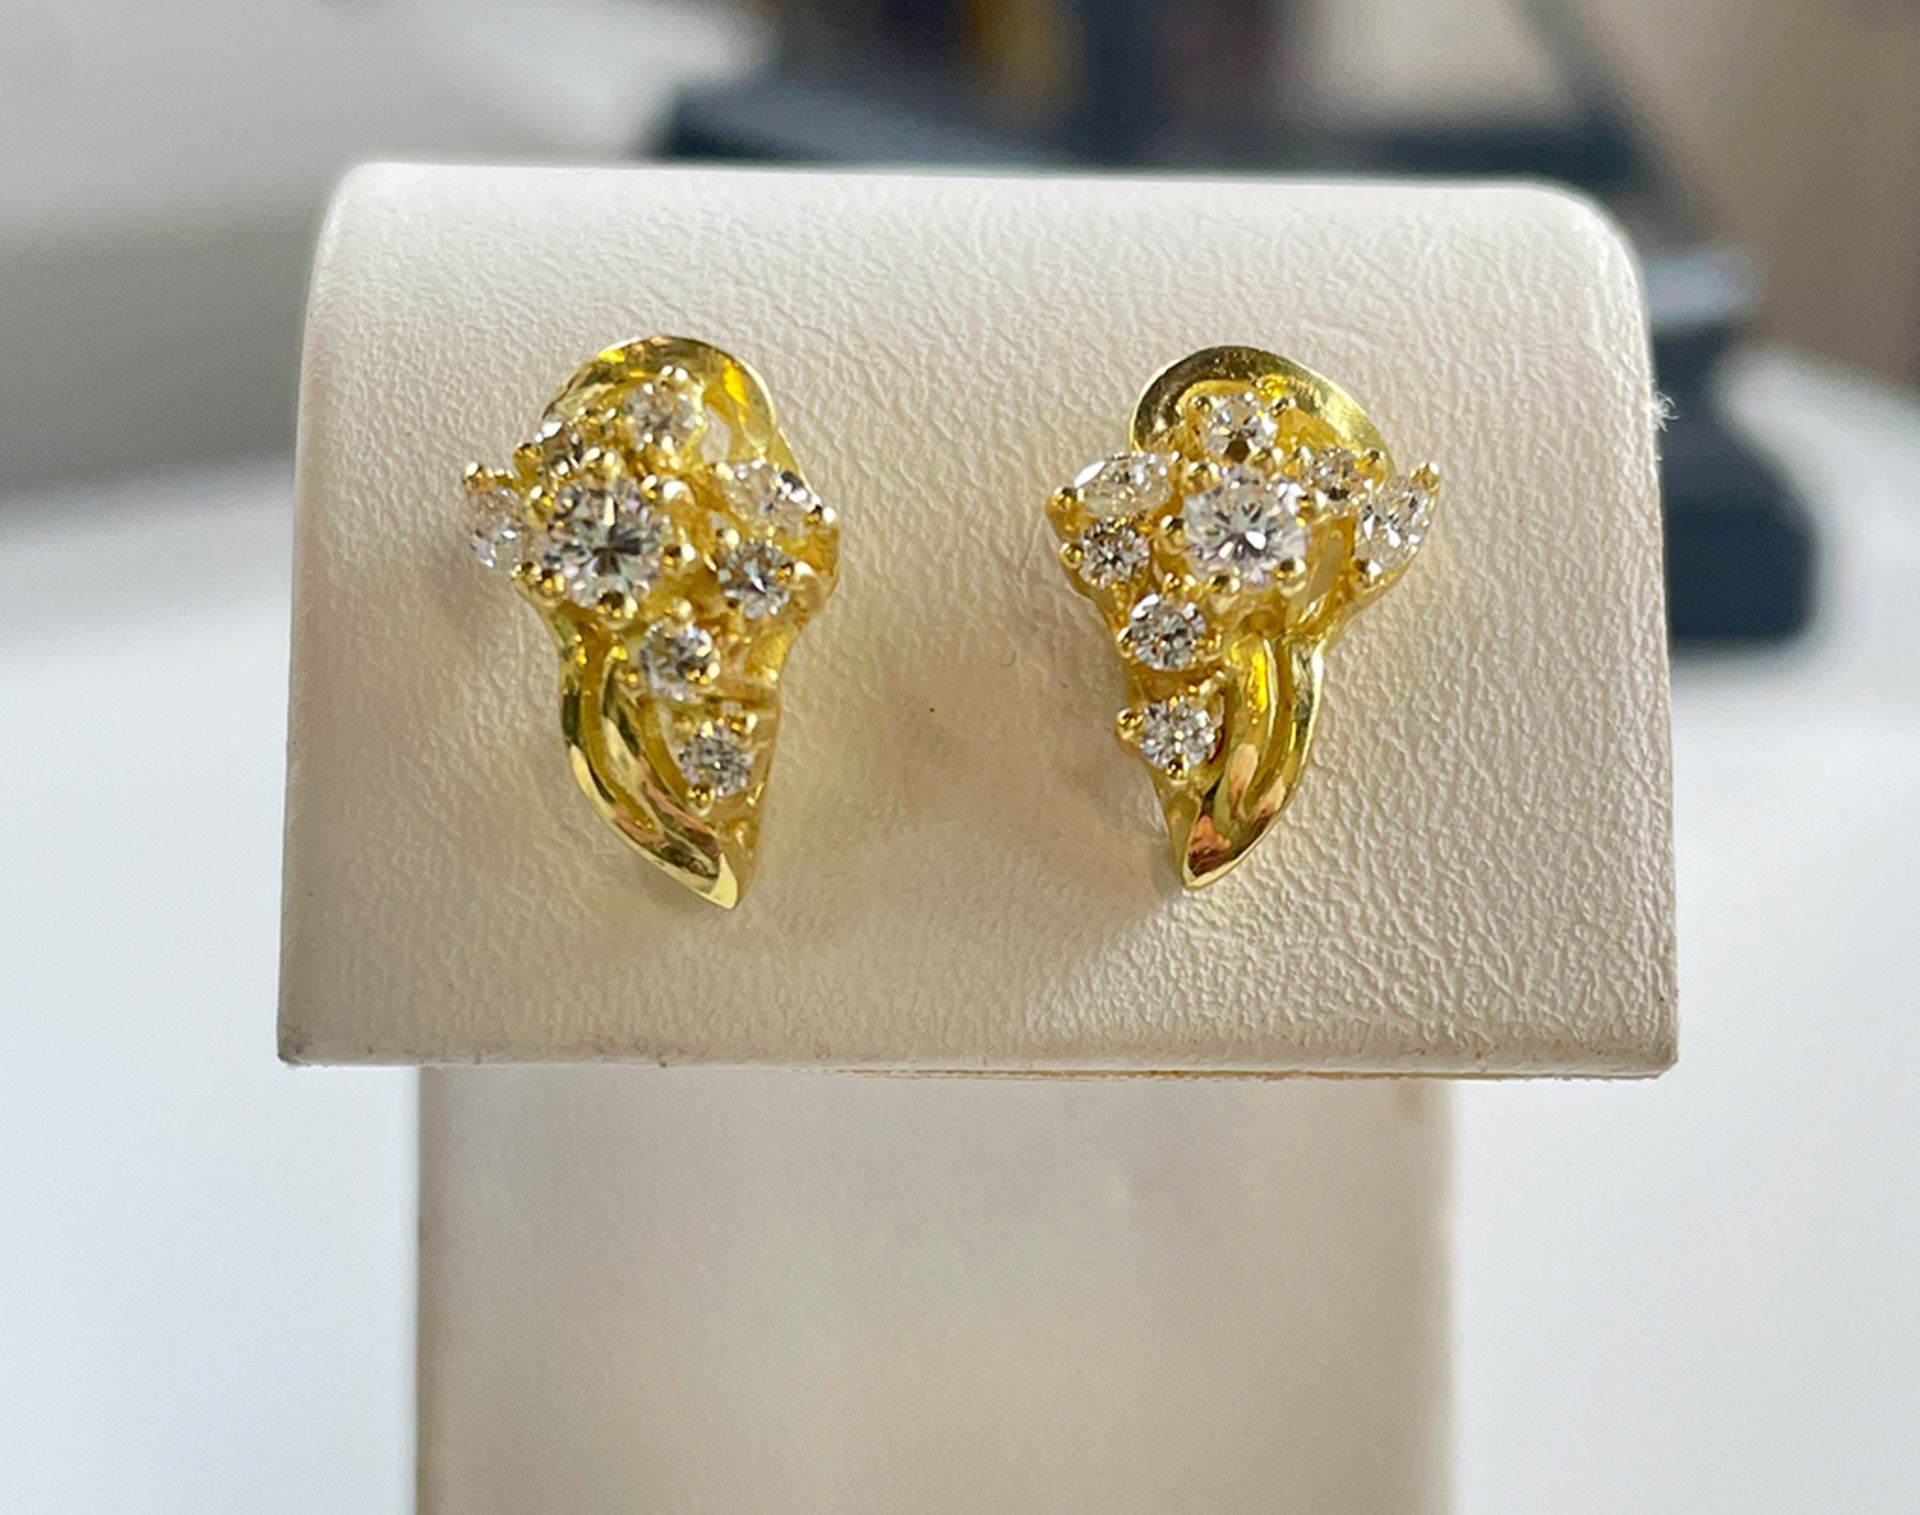 Earrings | Ear Studs 18K Gold with ca. 1ct diamonds / brilliants